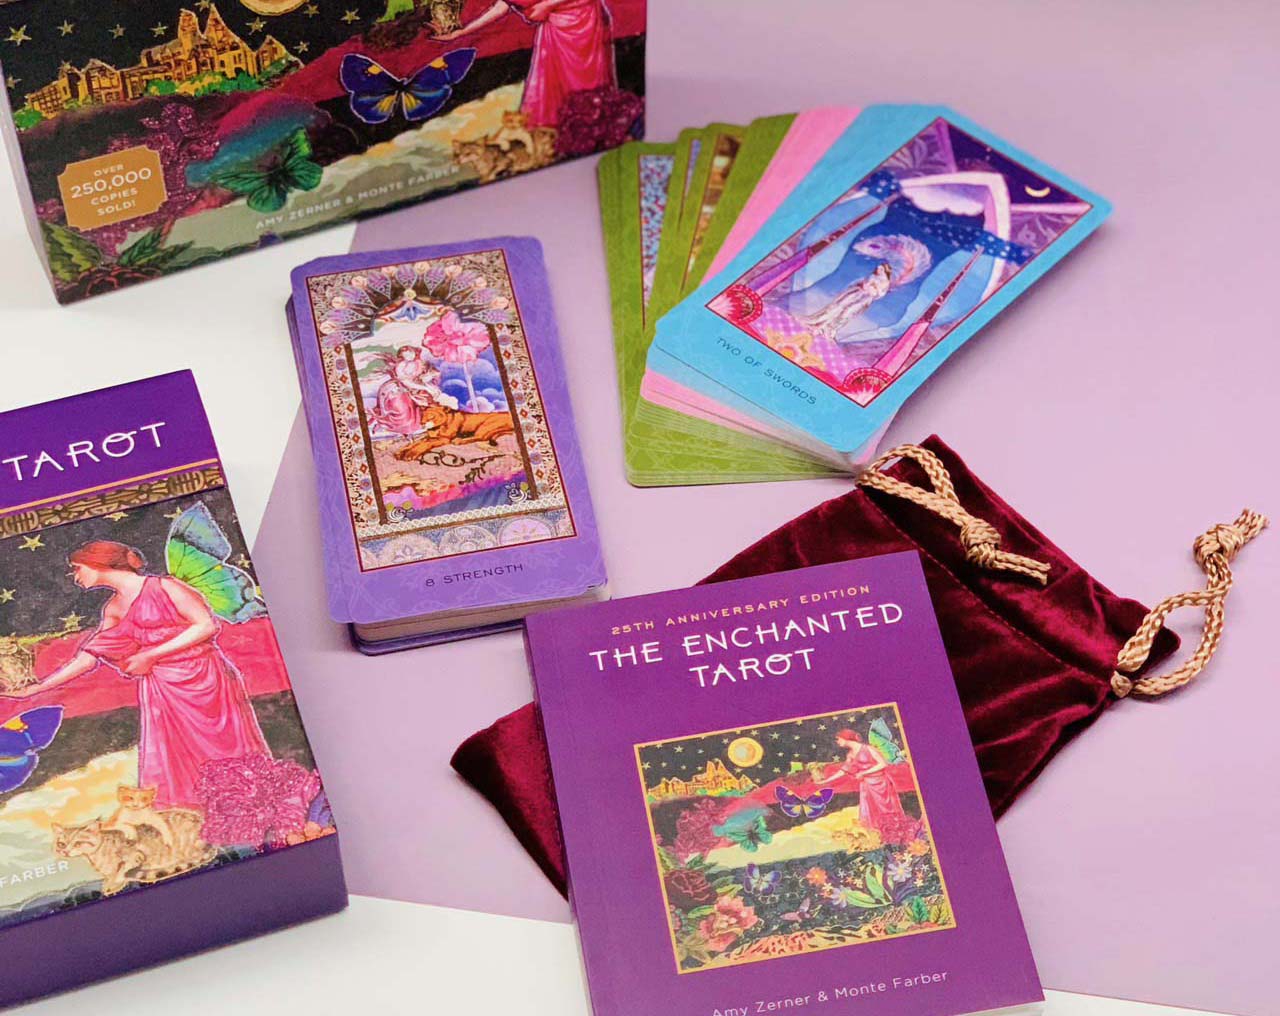 The Enchanted Tarot : 25th Anniversary Edition